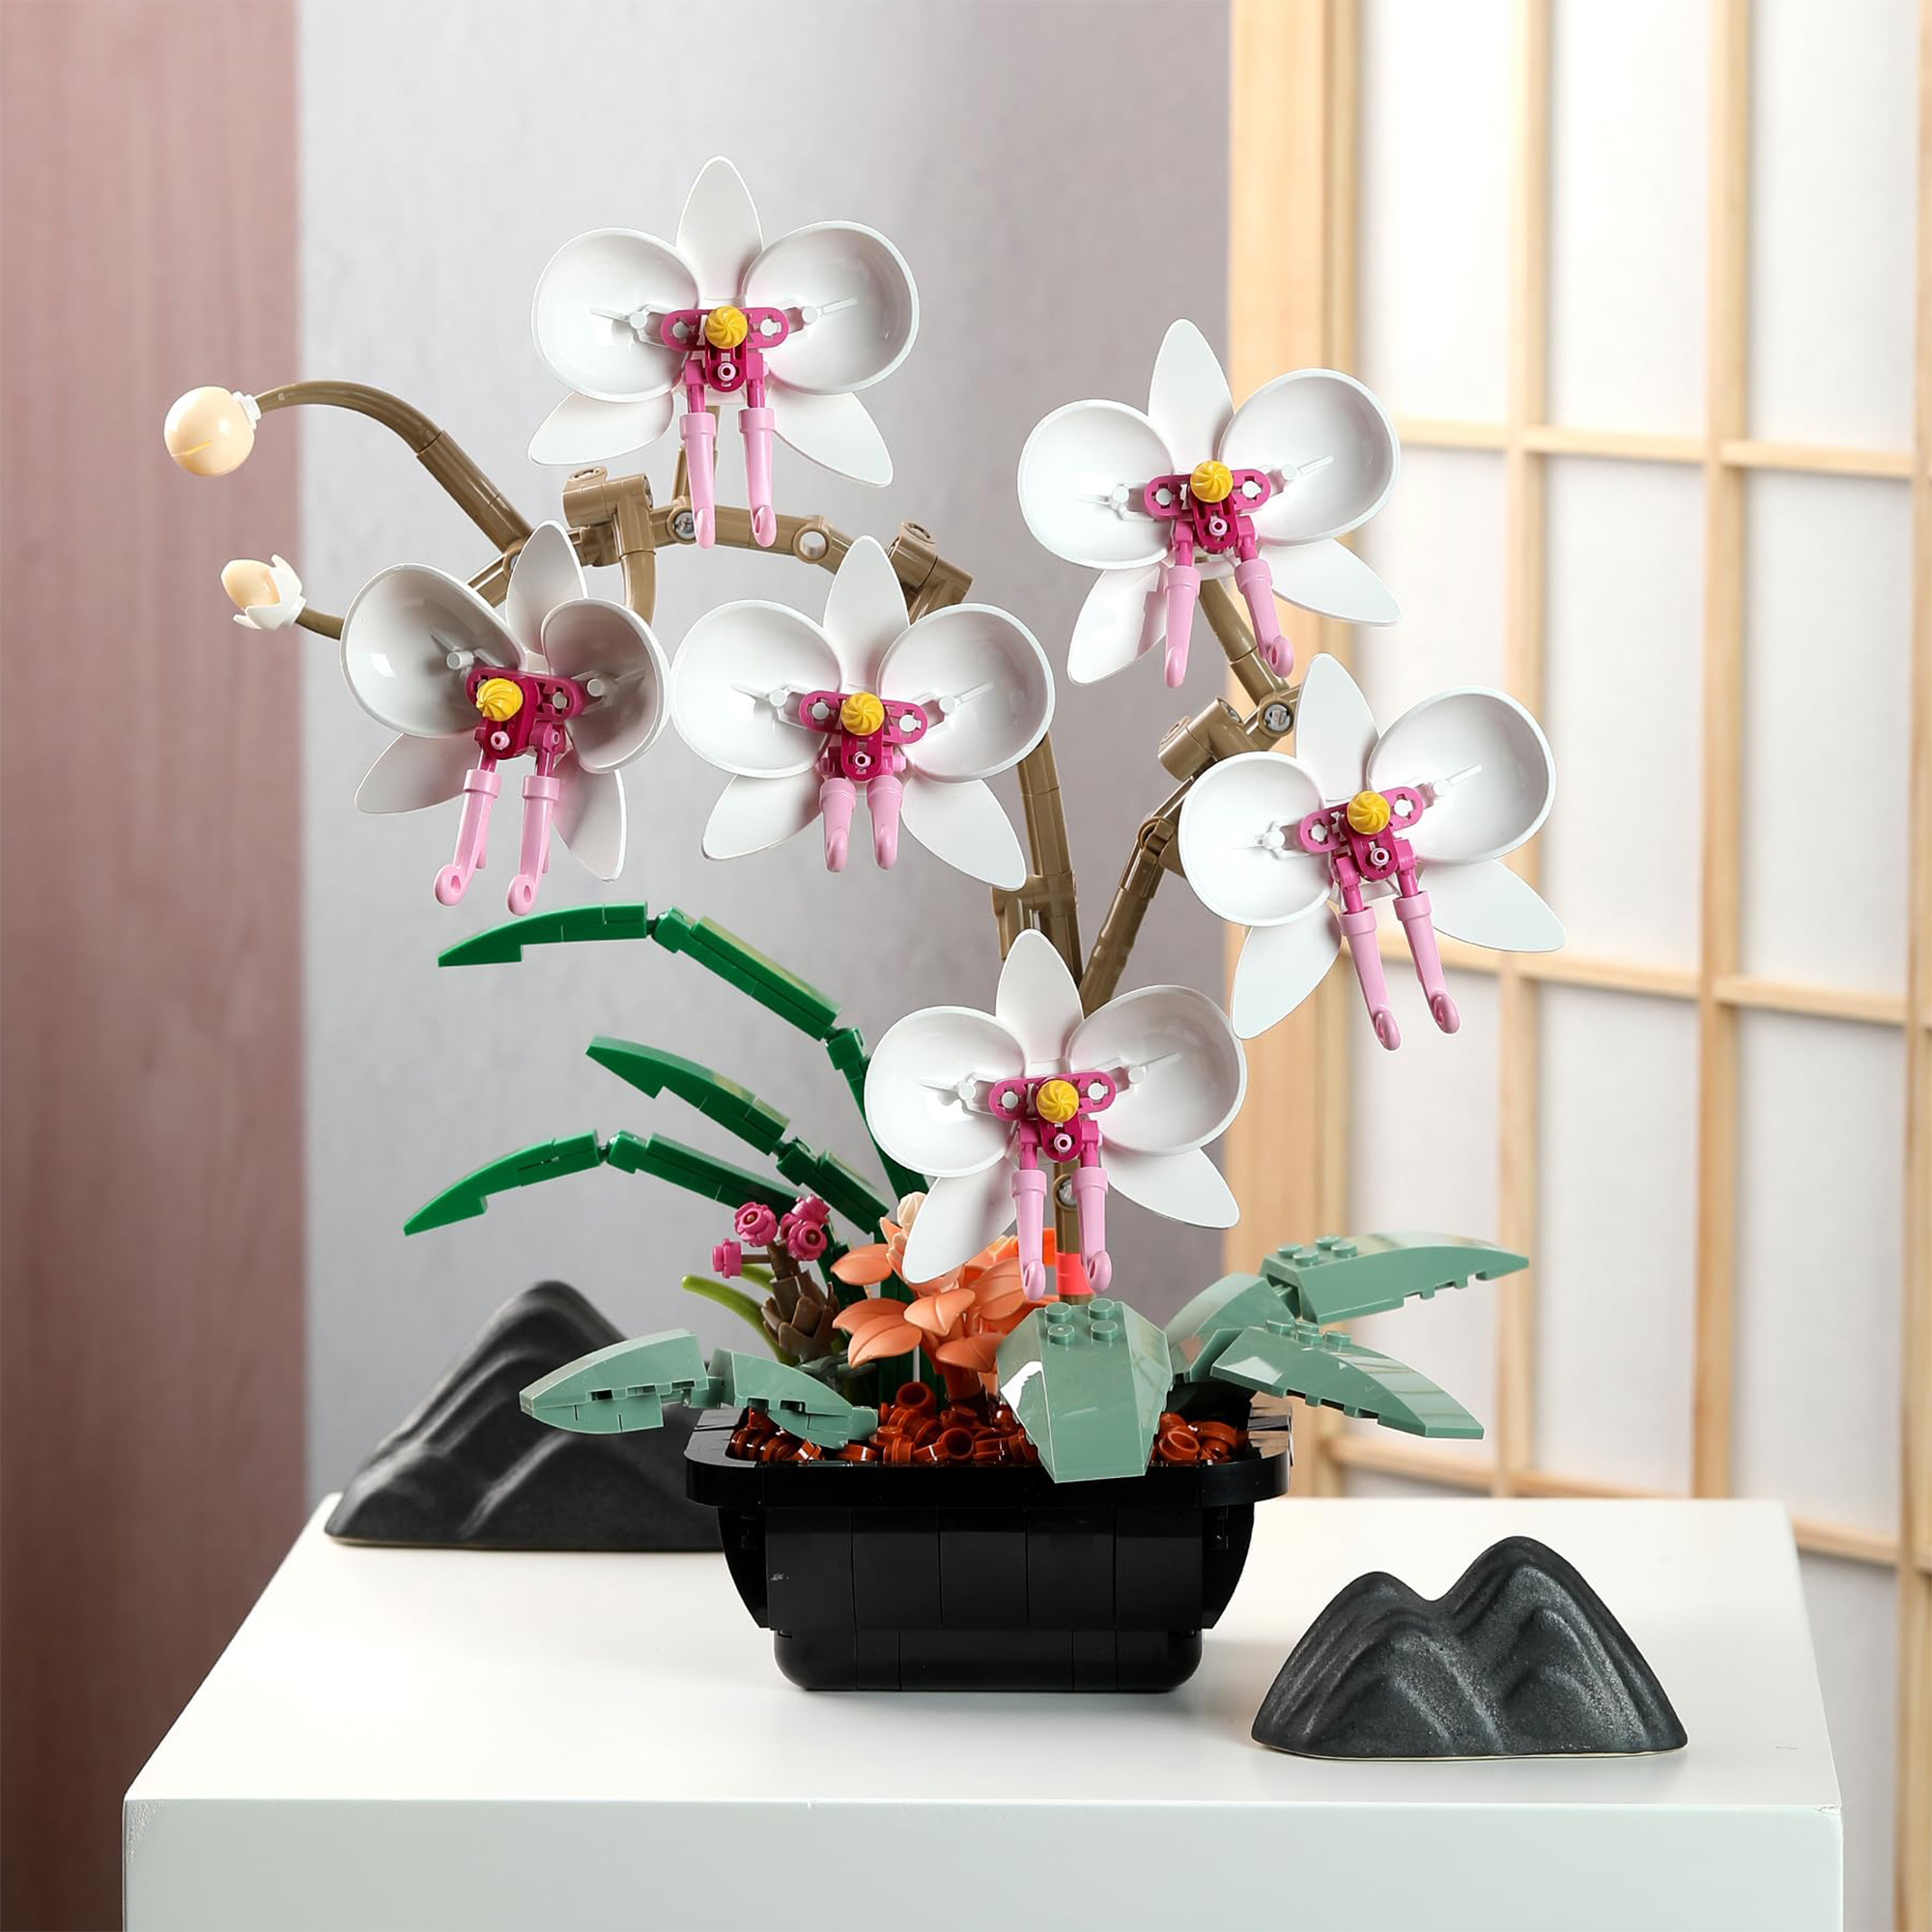 HI-Reeke Flower Building Block Set Orchid Botanical Bonsai Building Kit Toy Gift for Kid Adult White - image 2 of 6